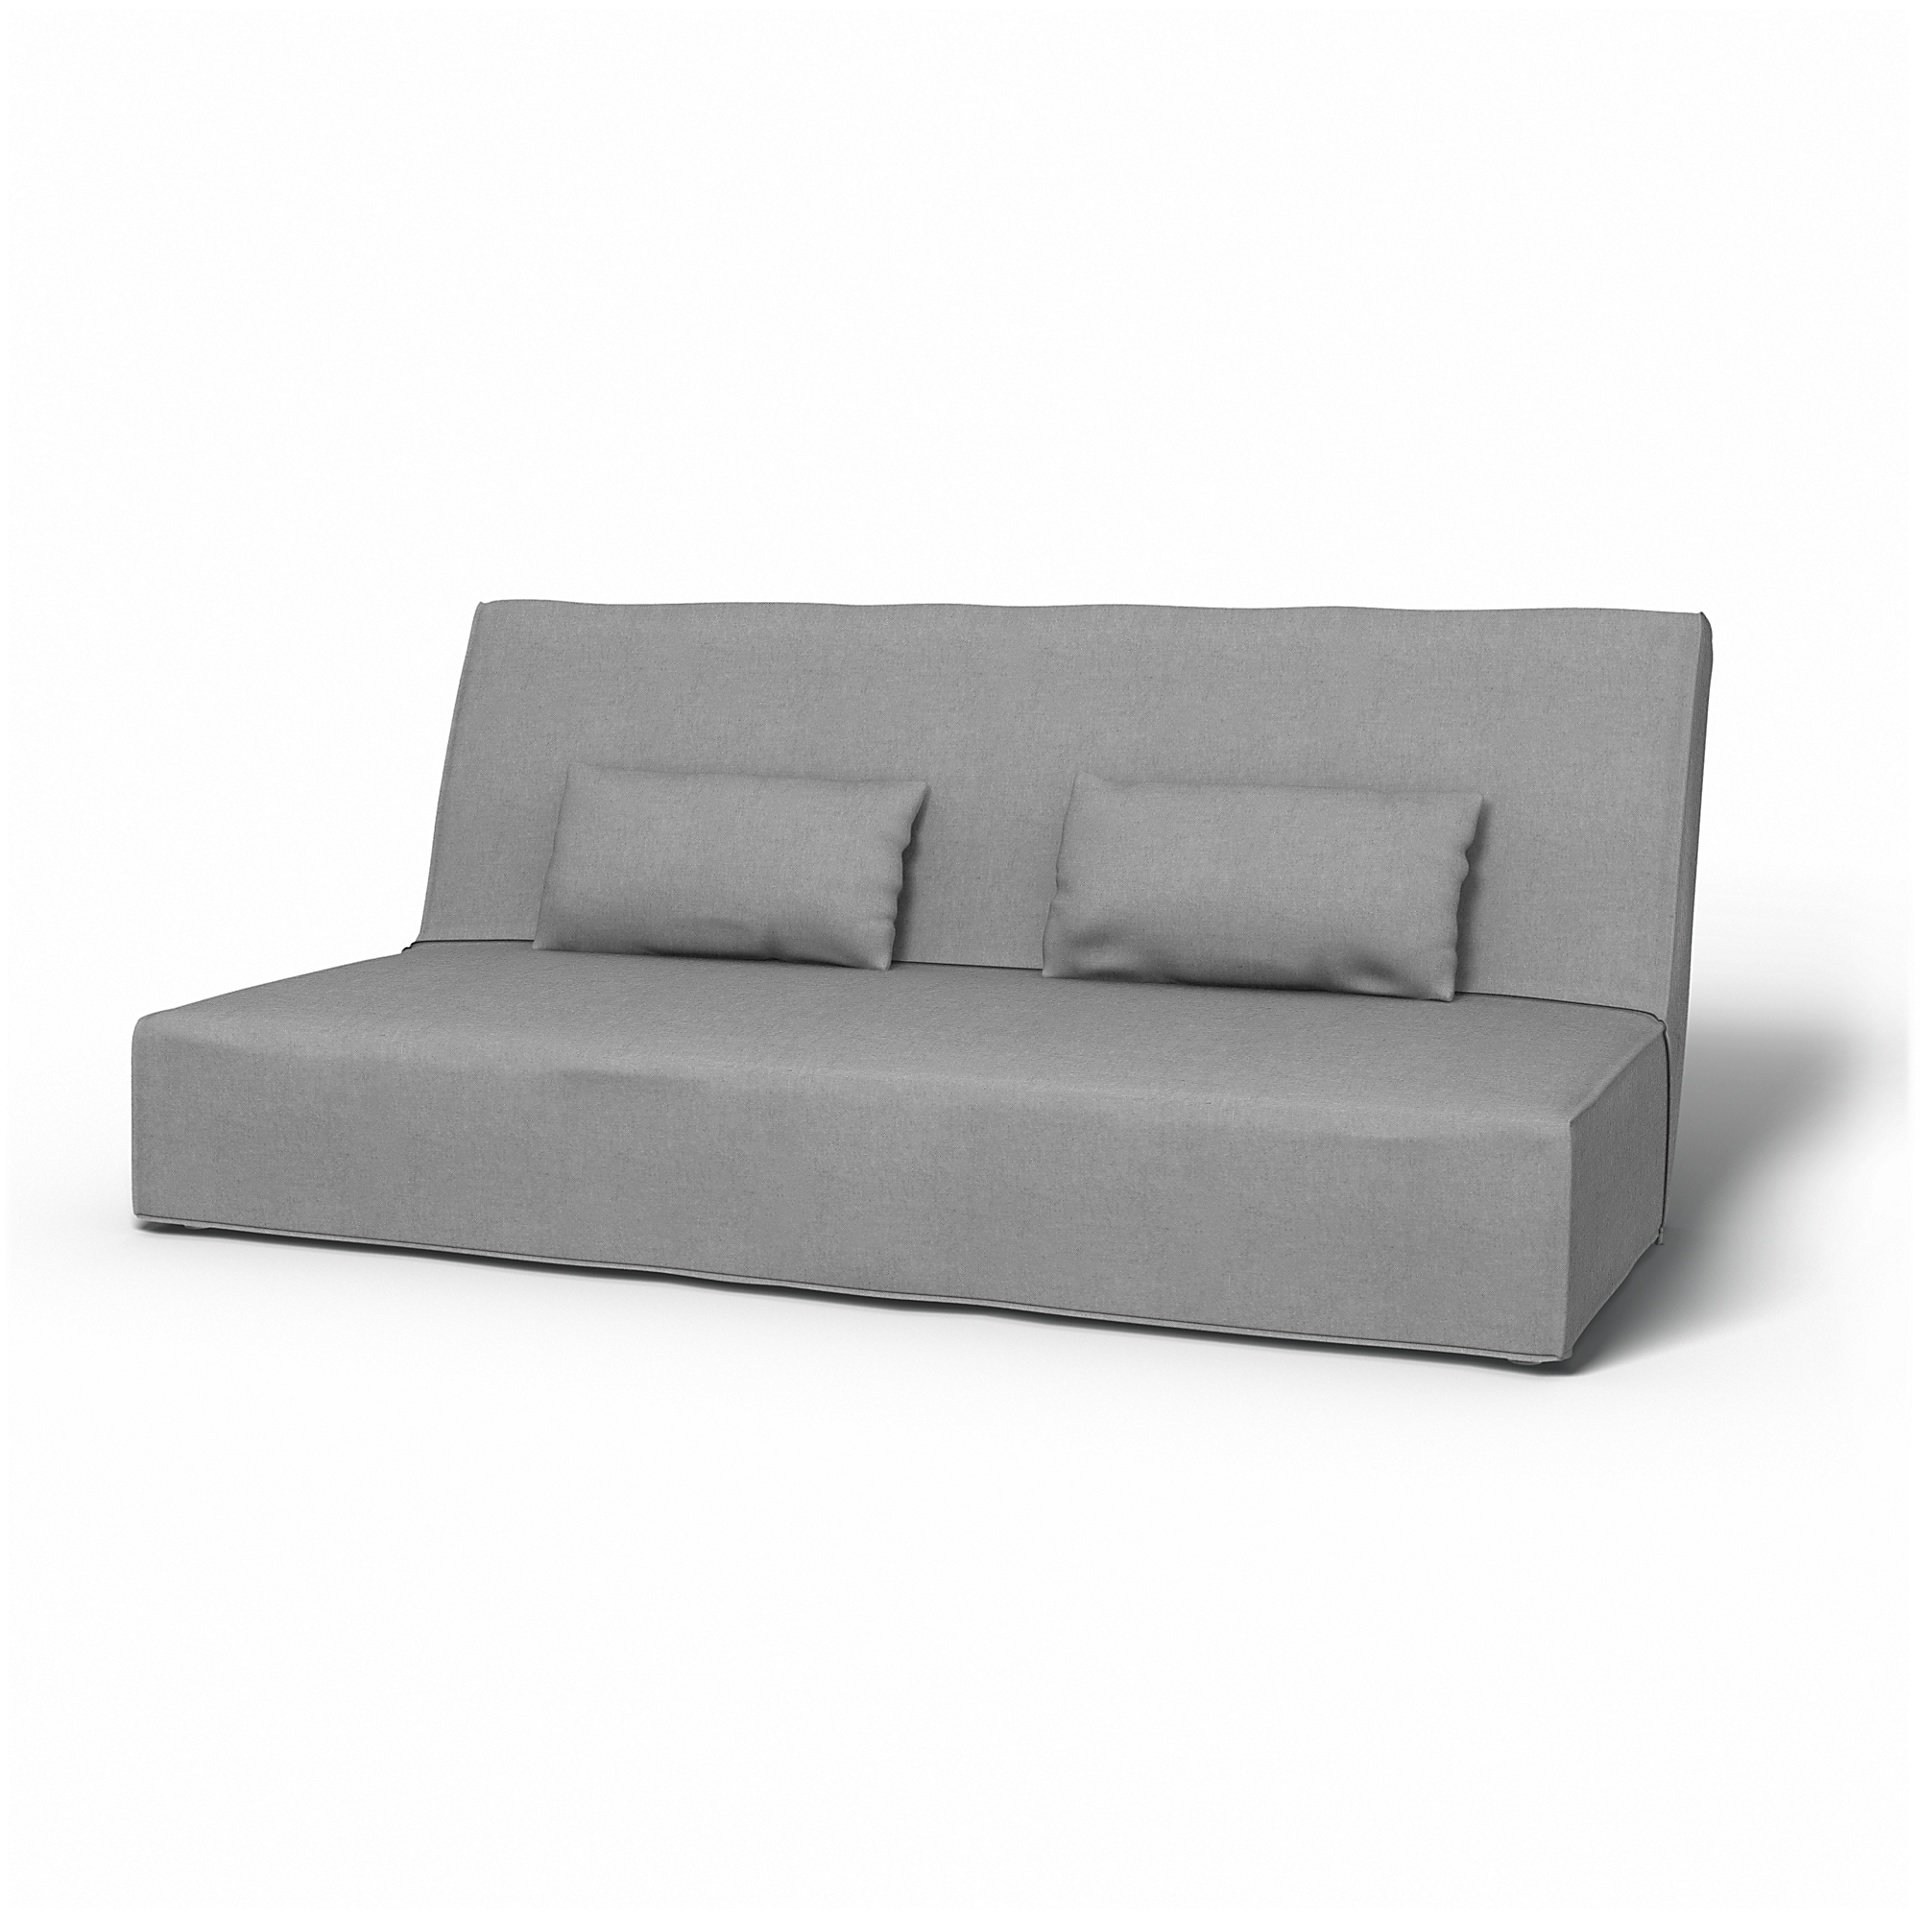 IKEA - Beddinge Sofa Bed Cover, Graphite, Linen - Bemz